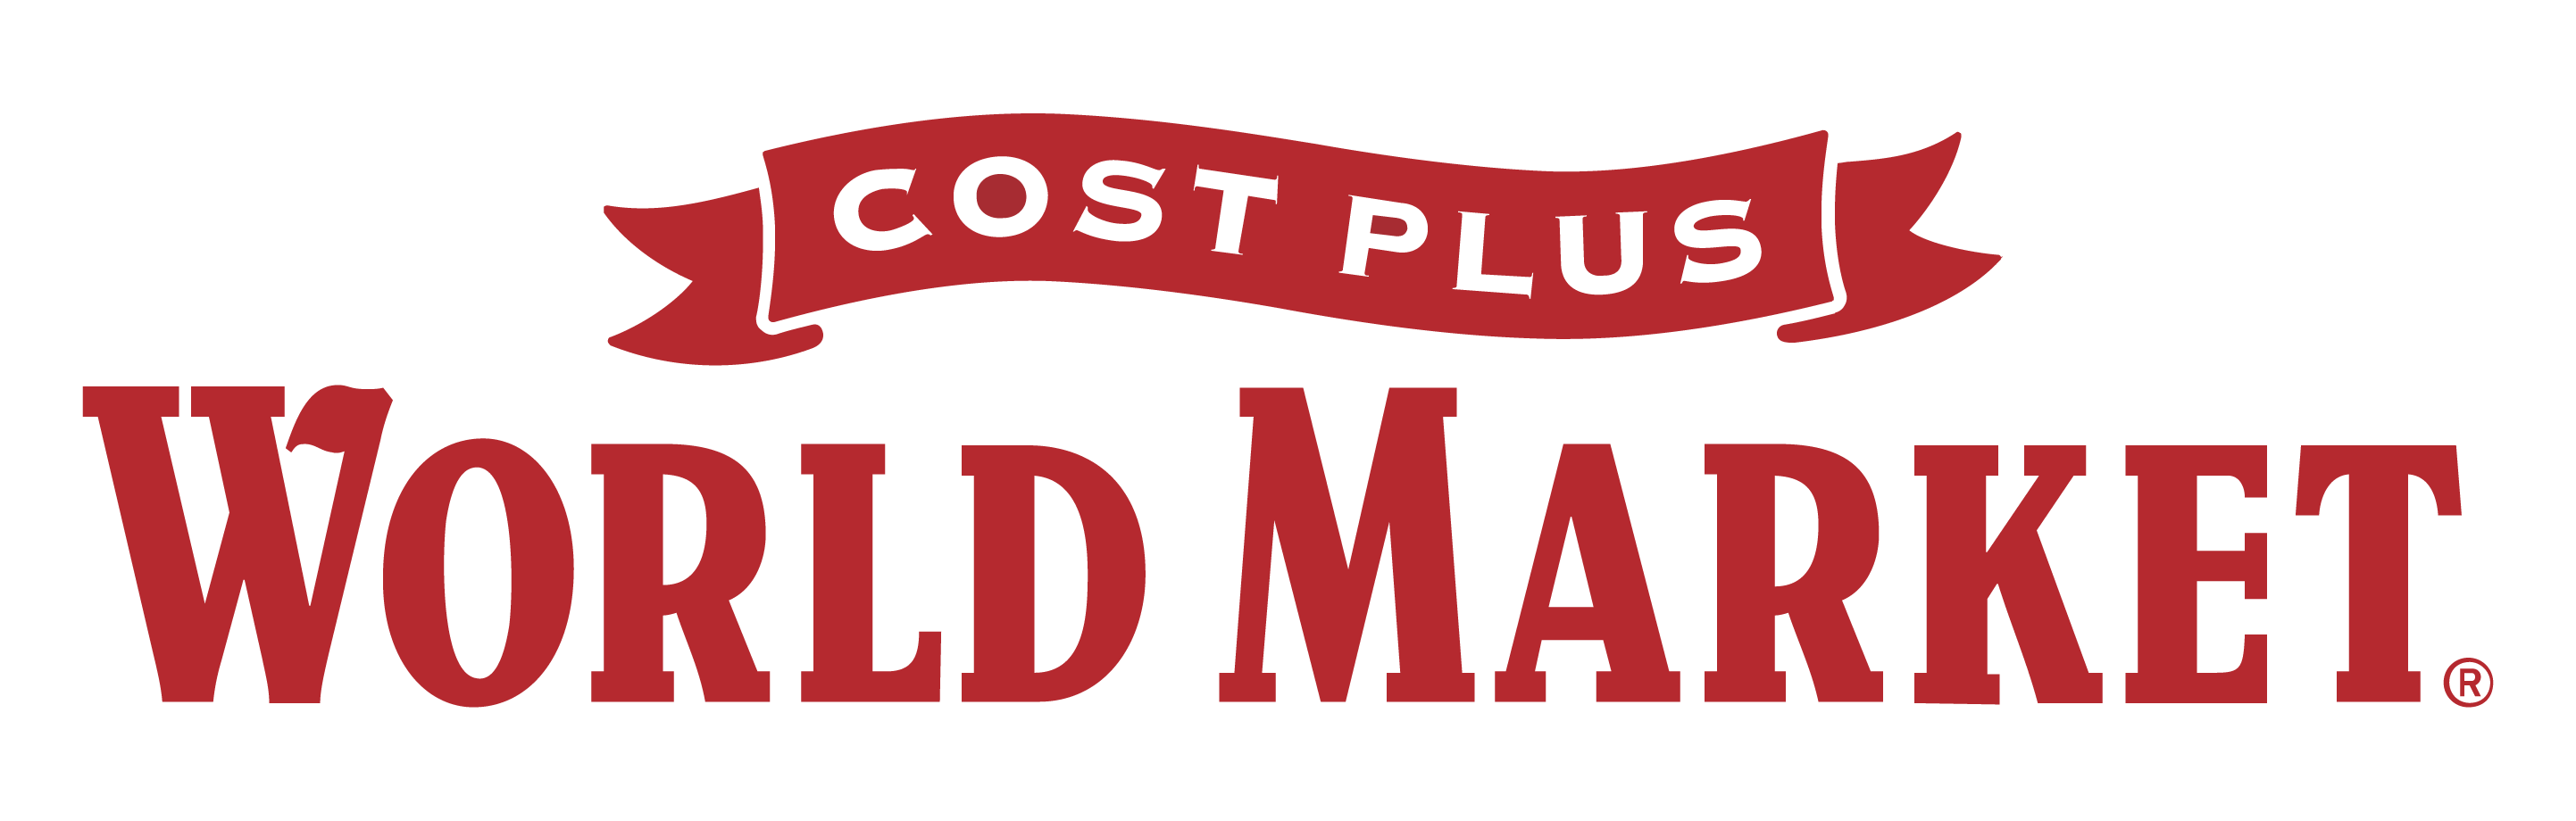 cost plus World Market